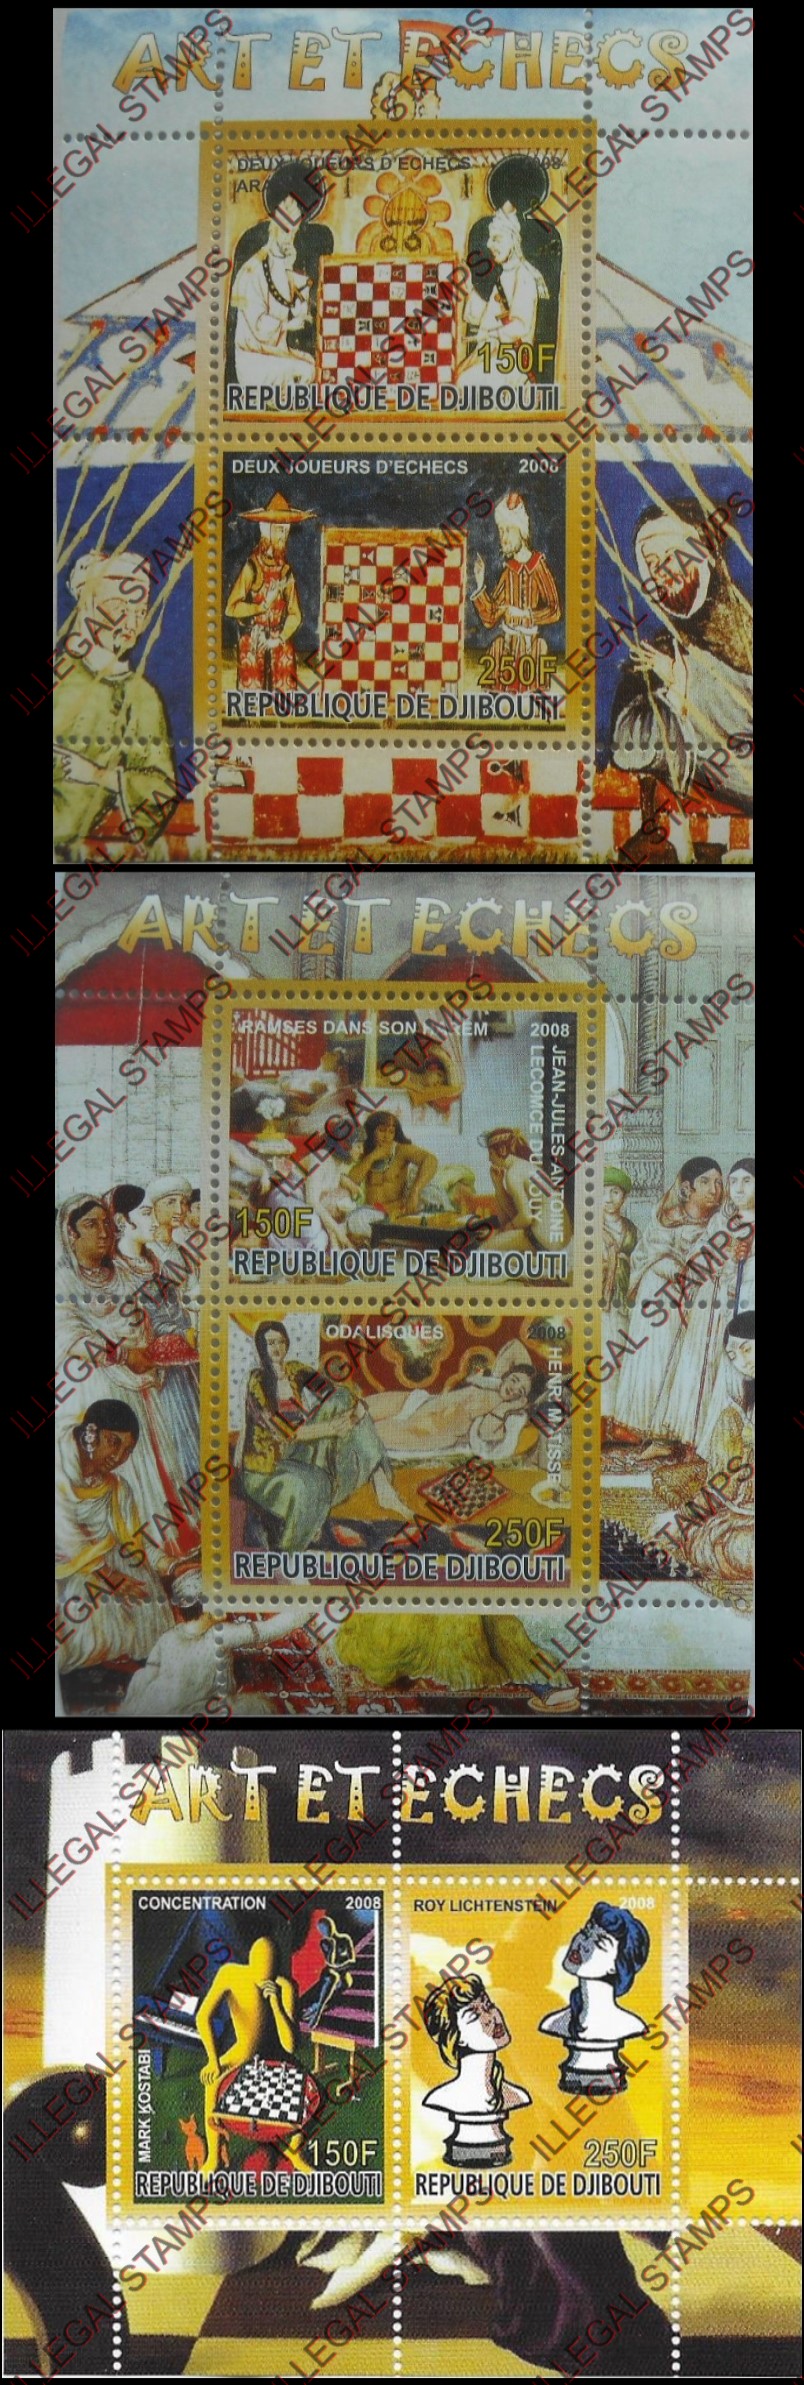 Djibouti 2008 Chess Illegal Stamp Souvenir Sheets of 2